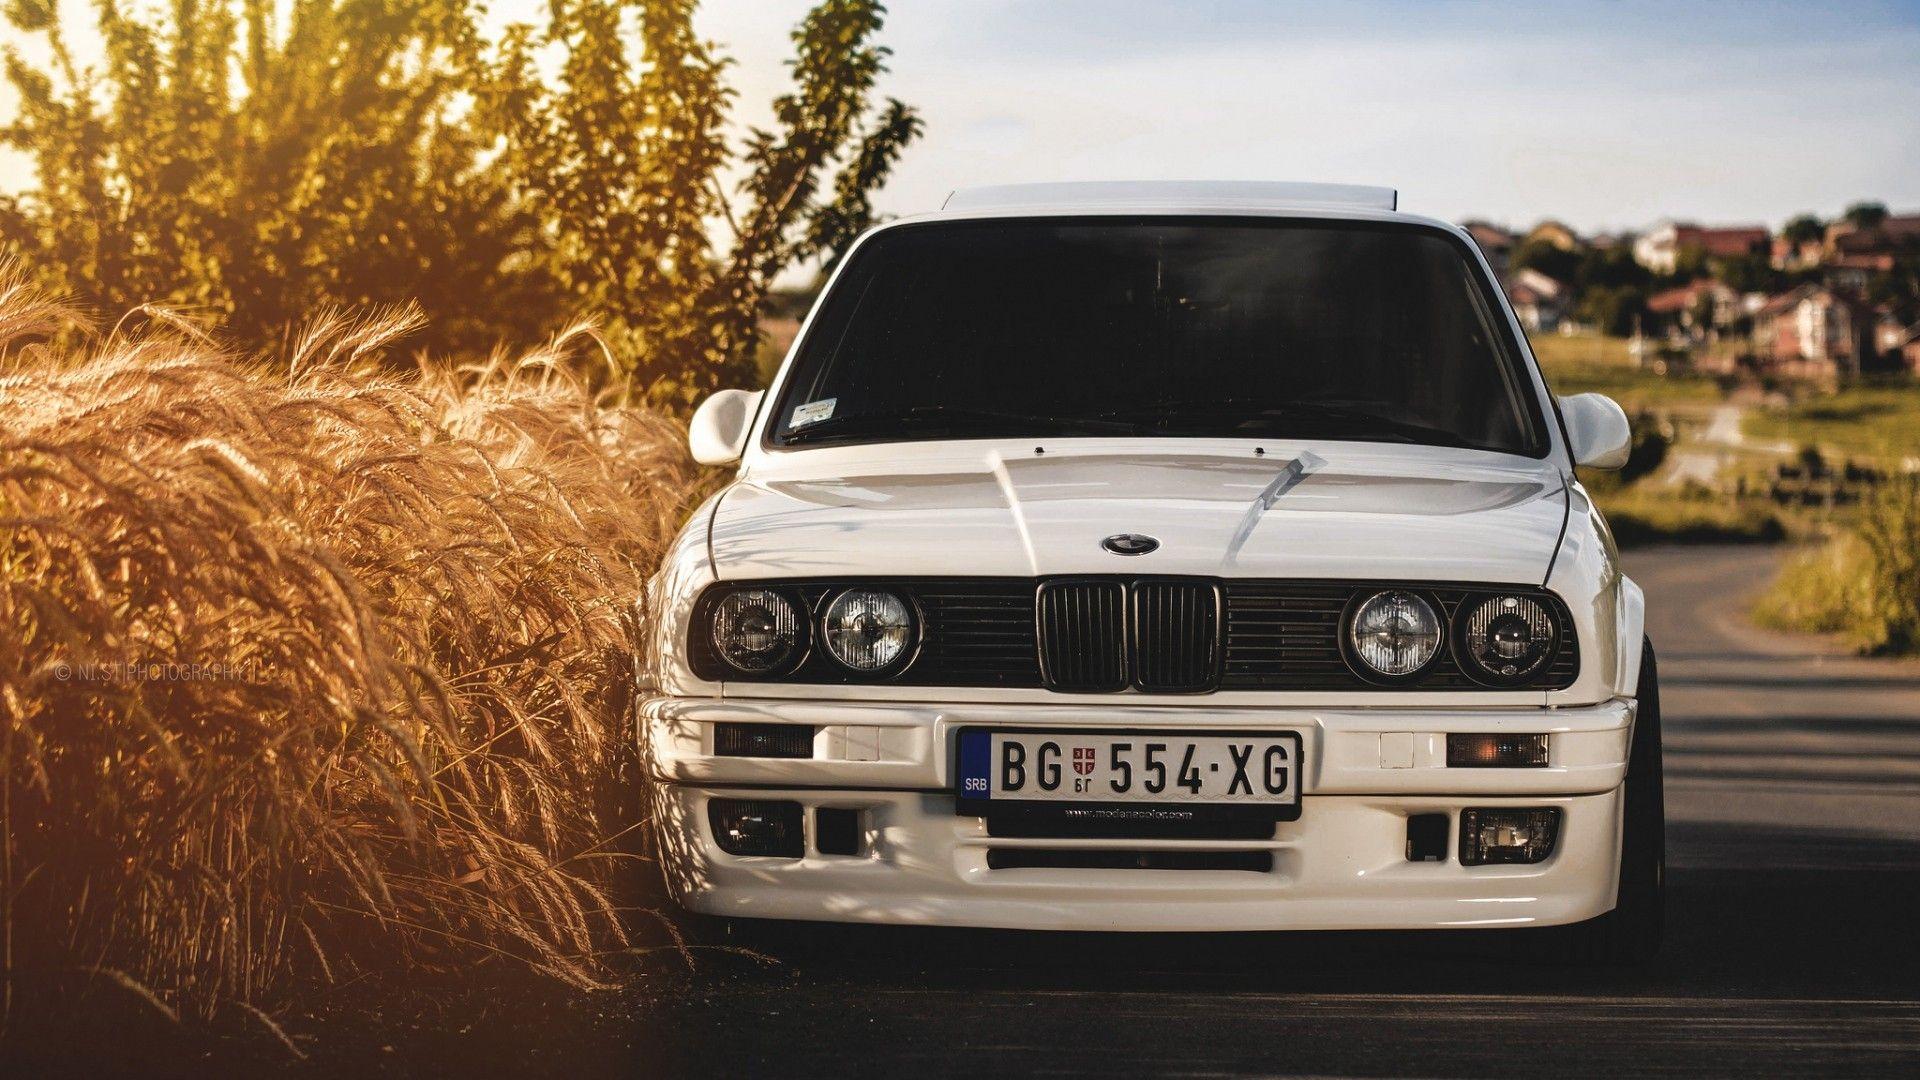 BMW E HD Cars, 4k Wallpaper, Image, Background, Photo